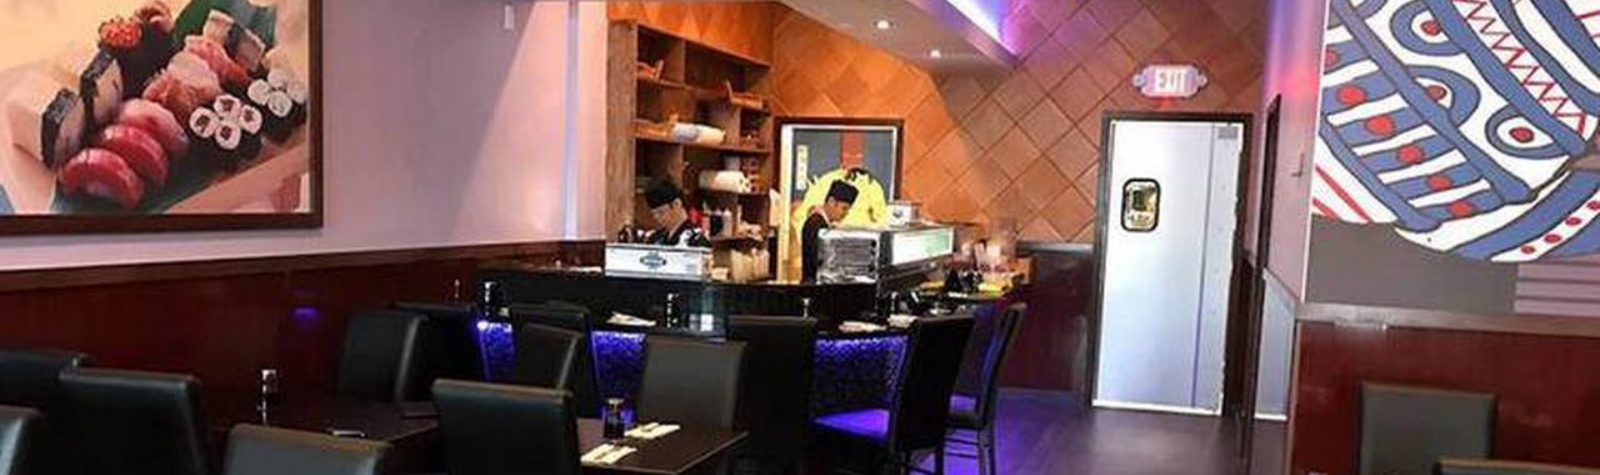 Skyland Town Center lands Japanese spot as its first full-service restaurant tenant